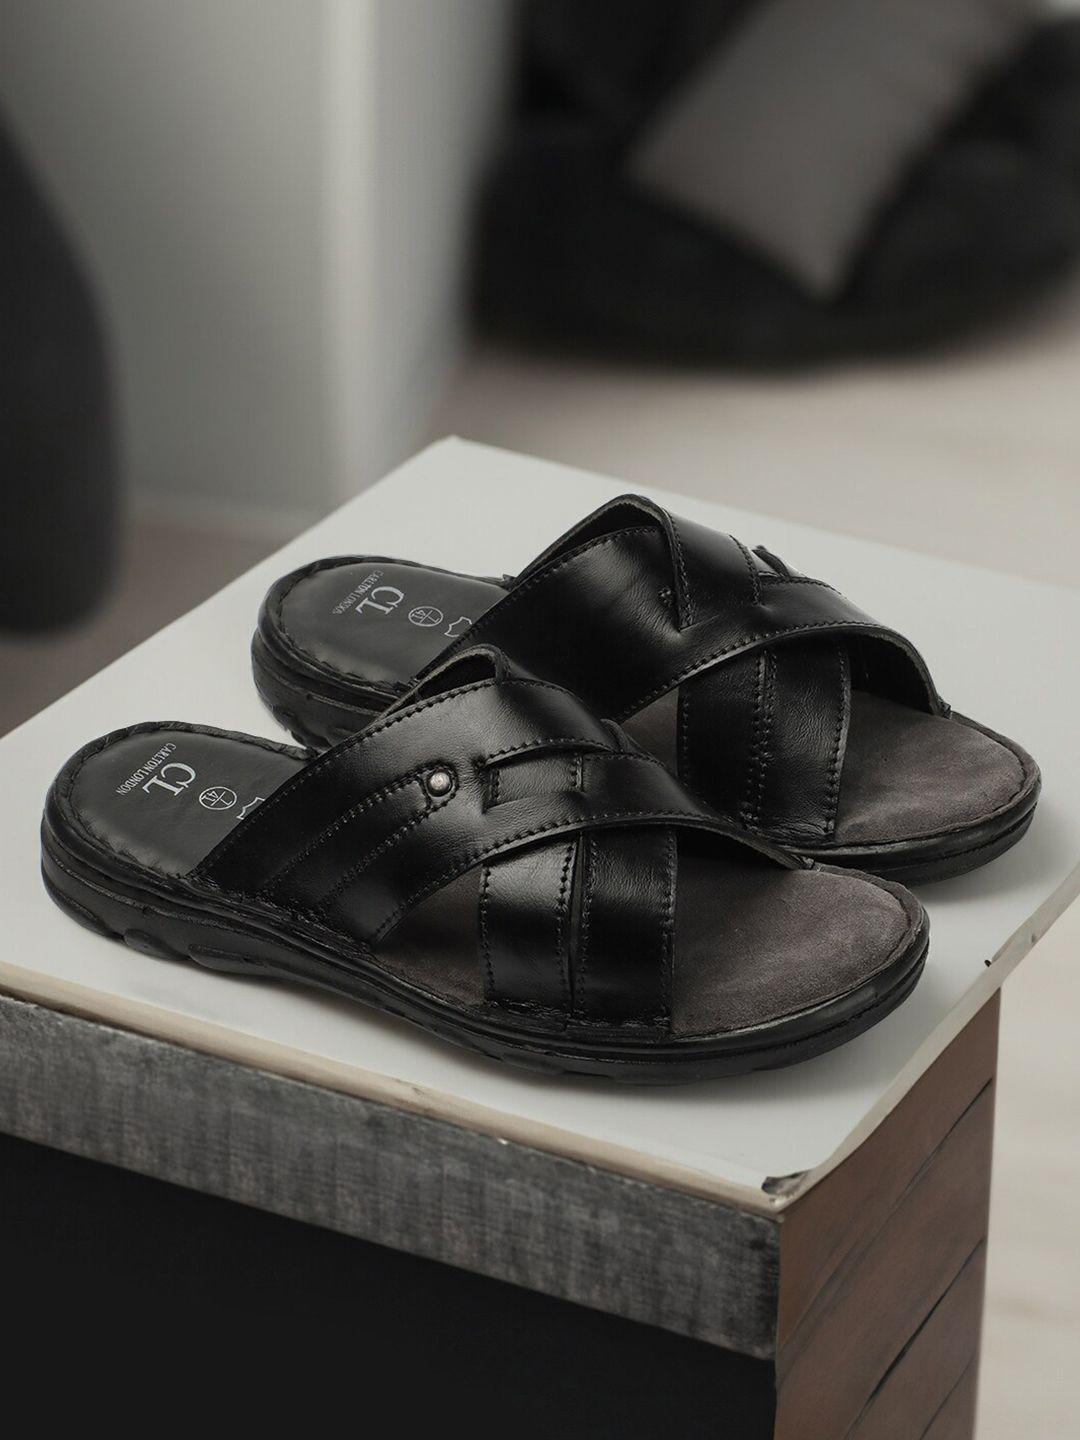 carlton london men cross strap lightweight leather comfort sandals